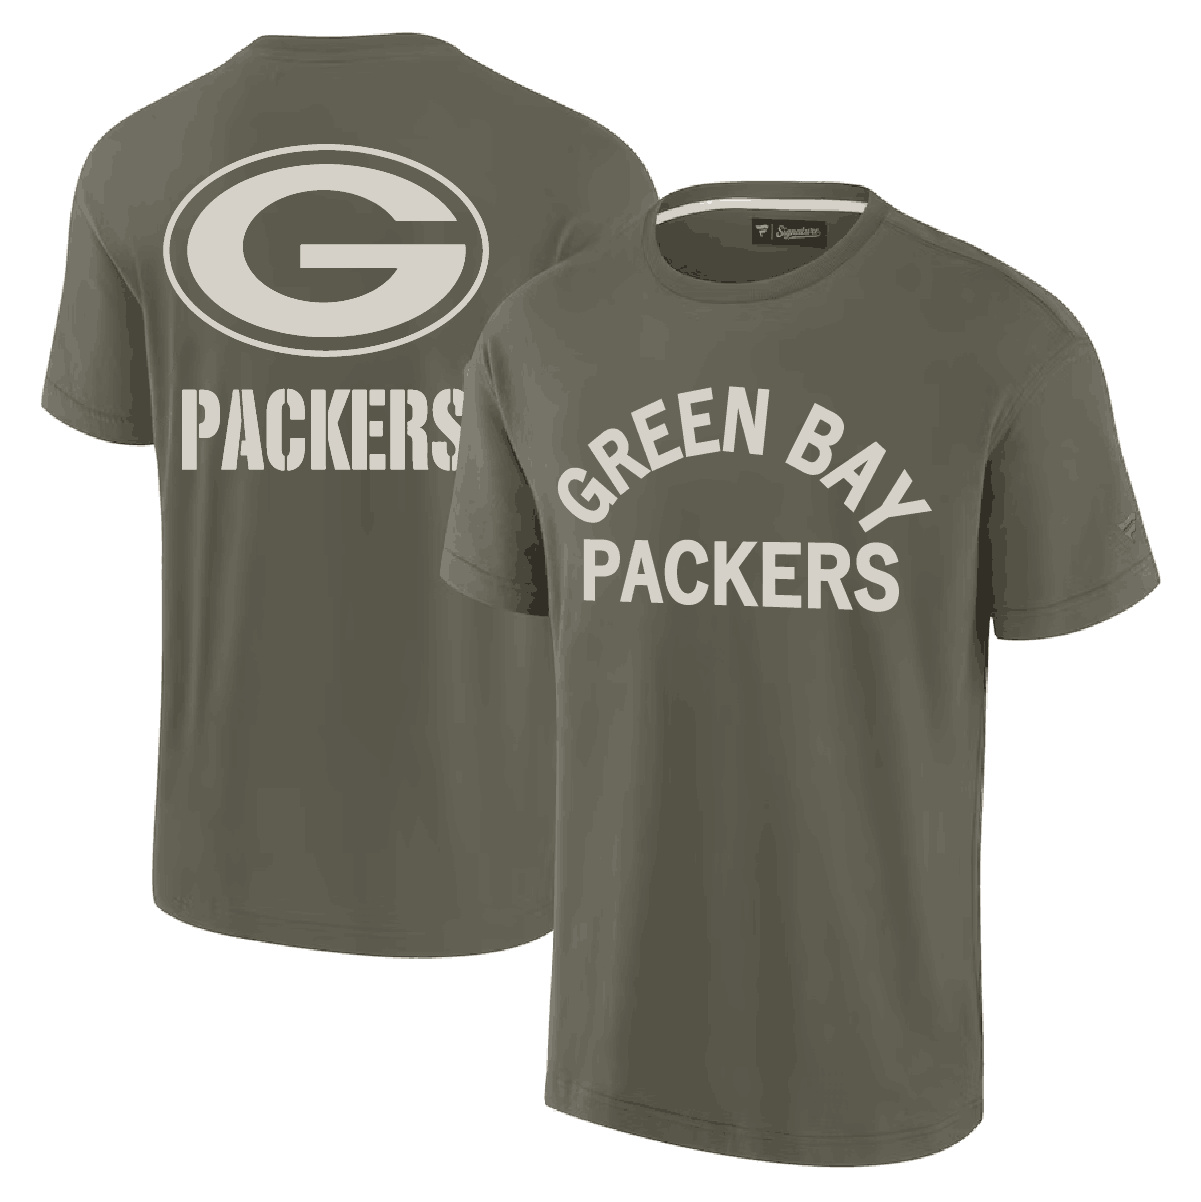 Men's Green Bay Packers Olive Elements Super Soft T-Shirt